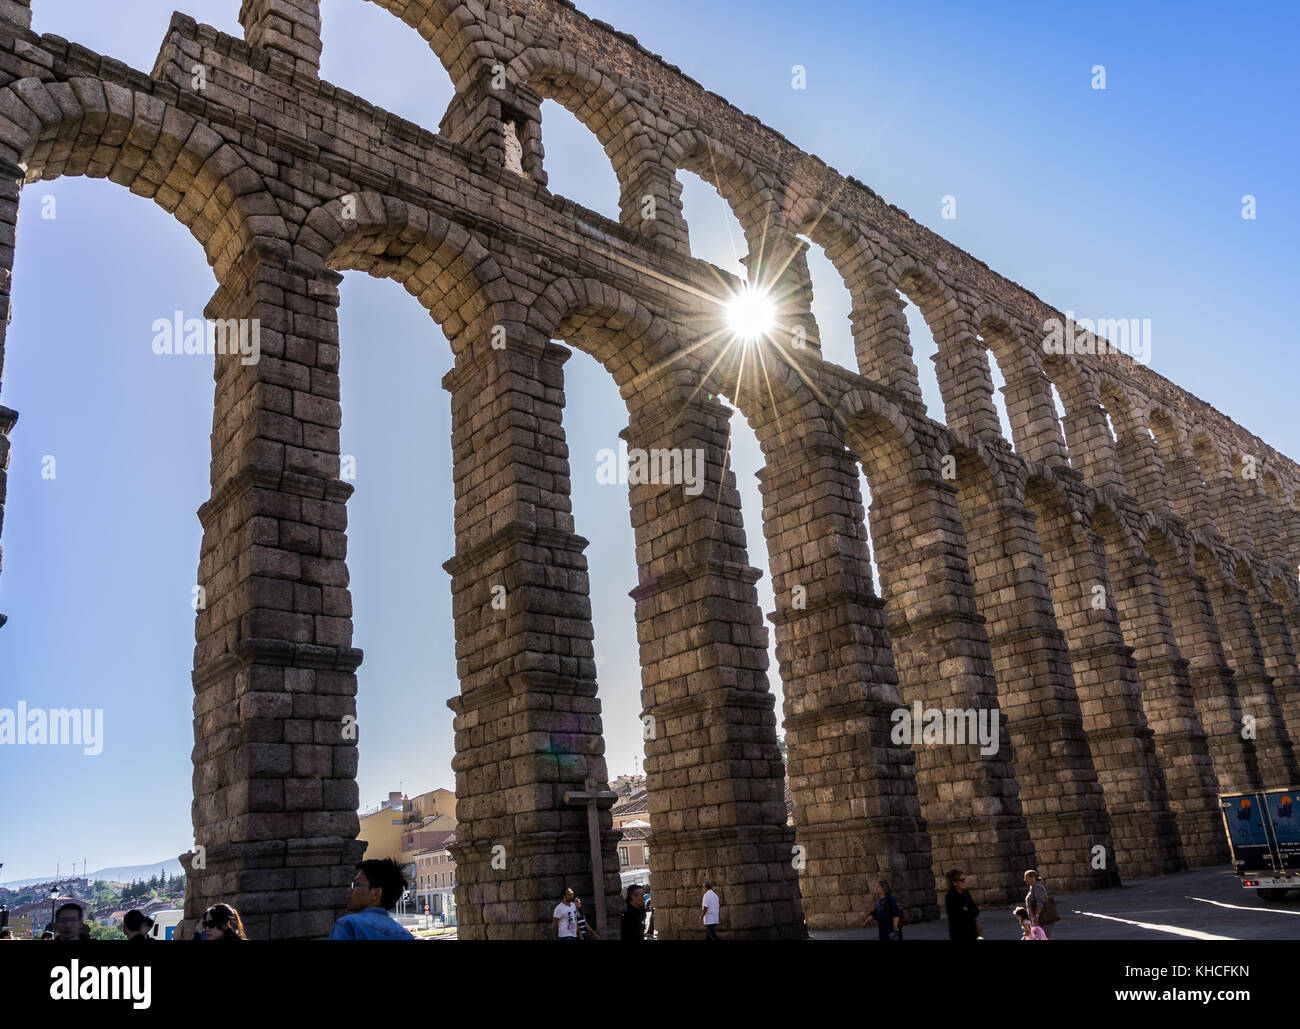 Segovia, Espagne - 2 septembre, 2017 : l'ancien aqueduc romain à Ségovie, Espagne. Banque D'Images